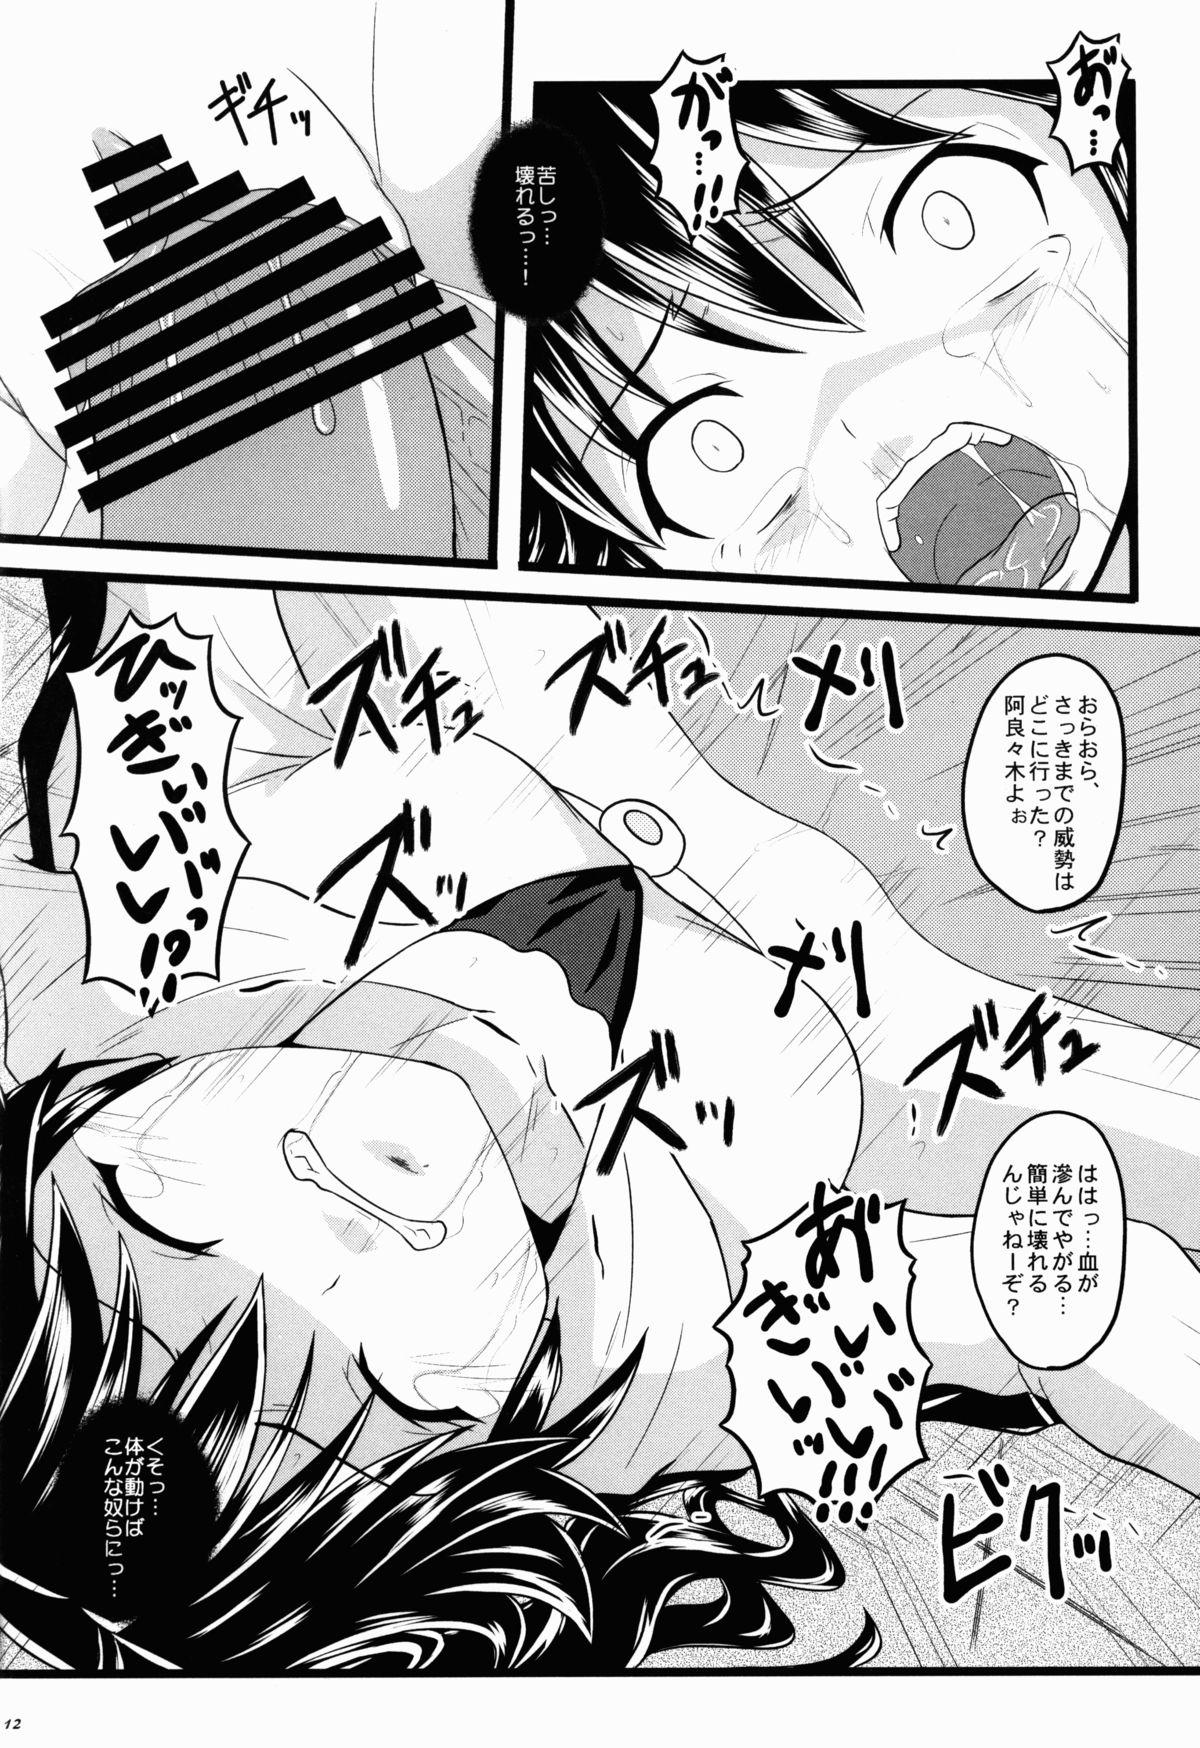 Gordinha Miss Fire - Bakemonogatari Anime - Page 12